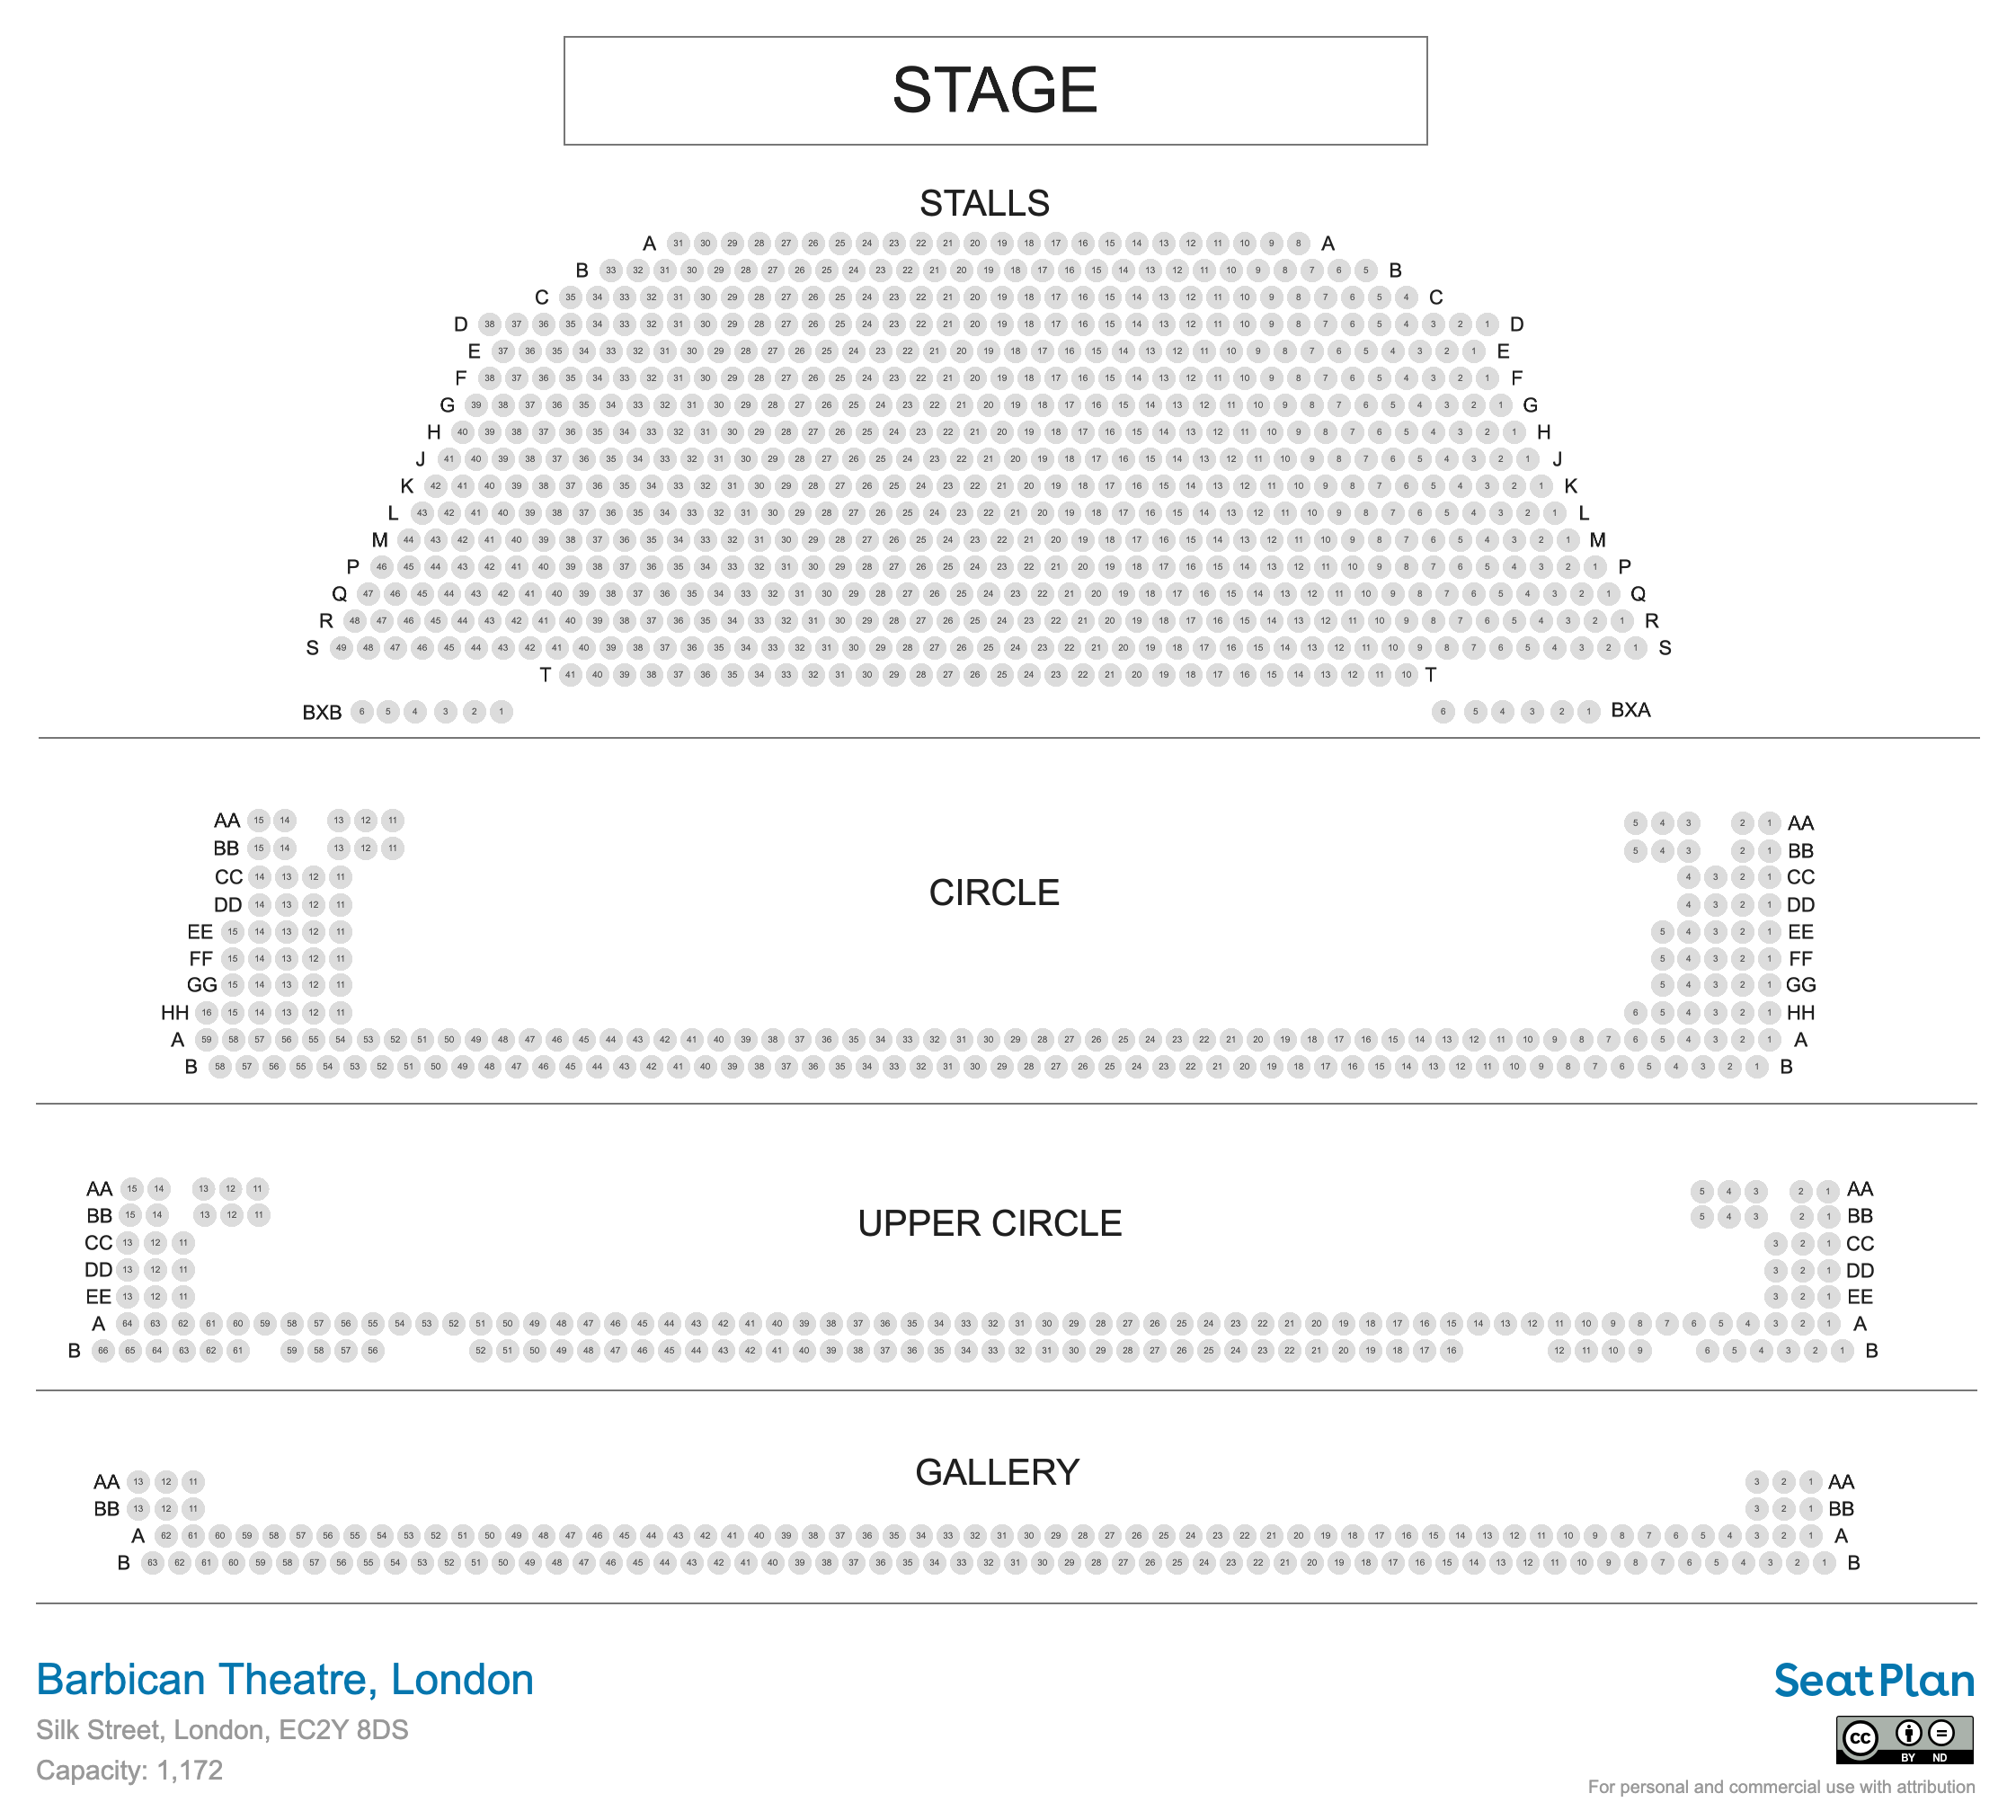 Barbican Theatre seating plan